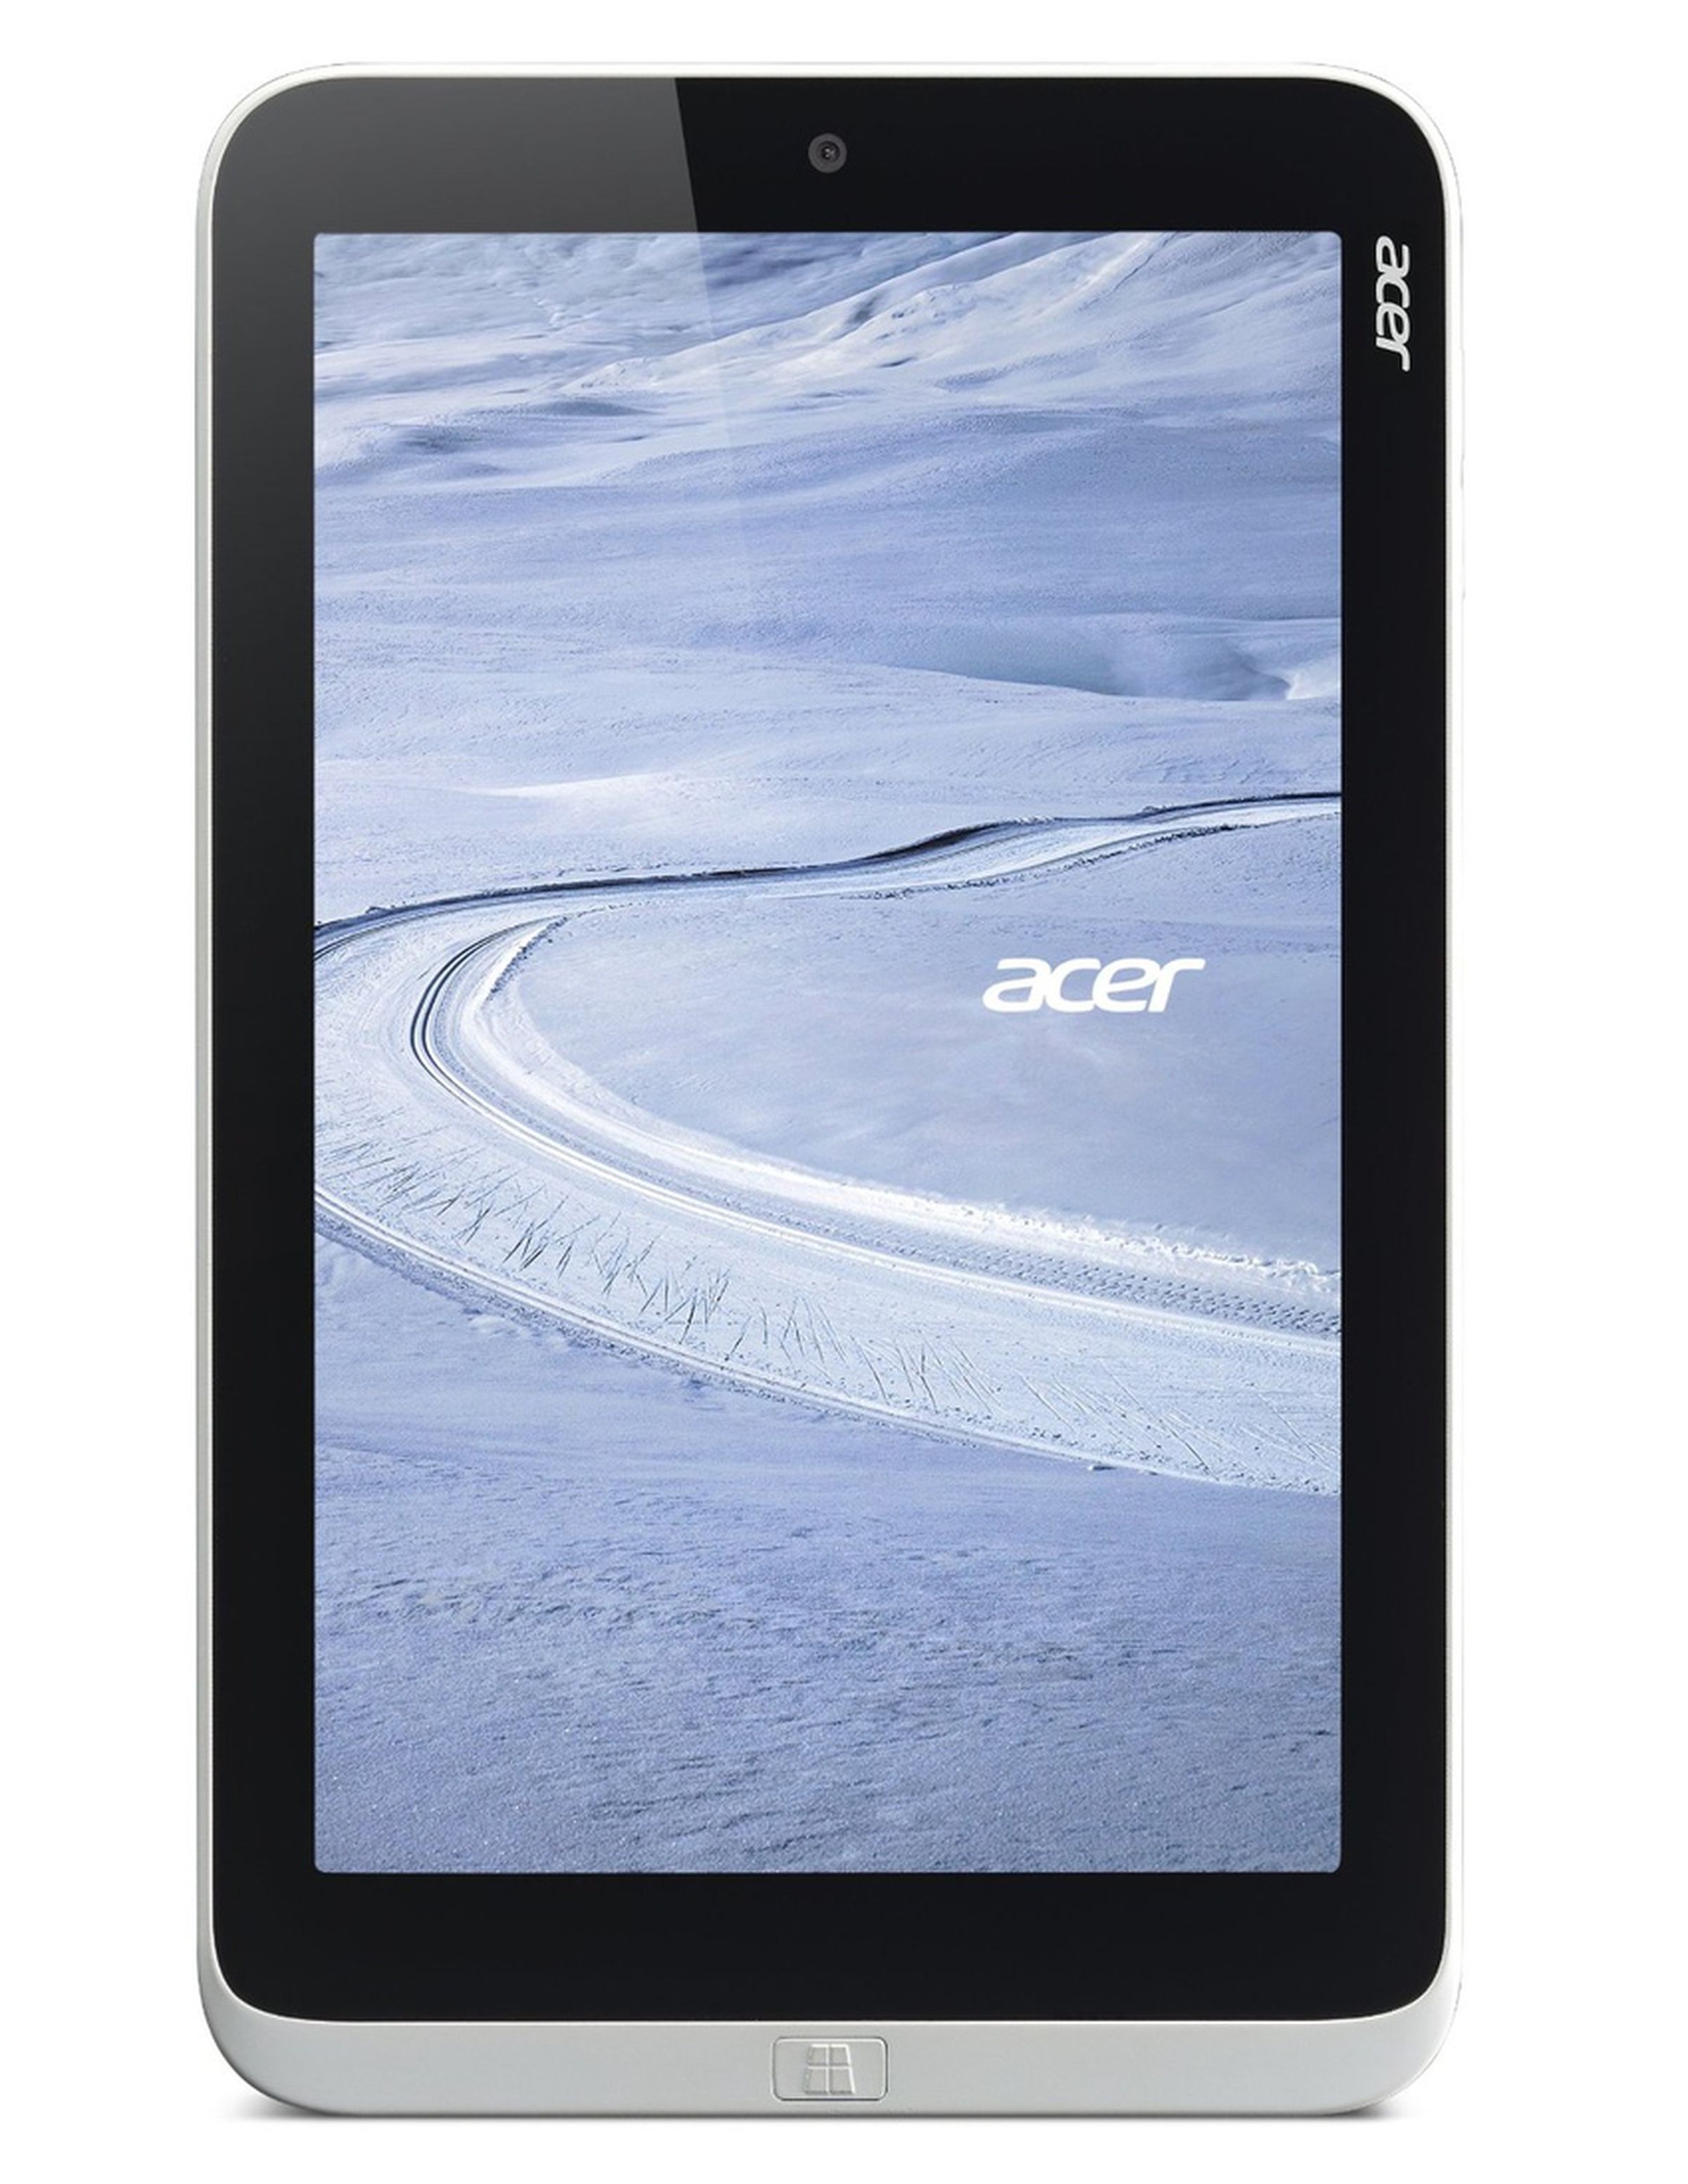 Acer W3-810 press photos